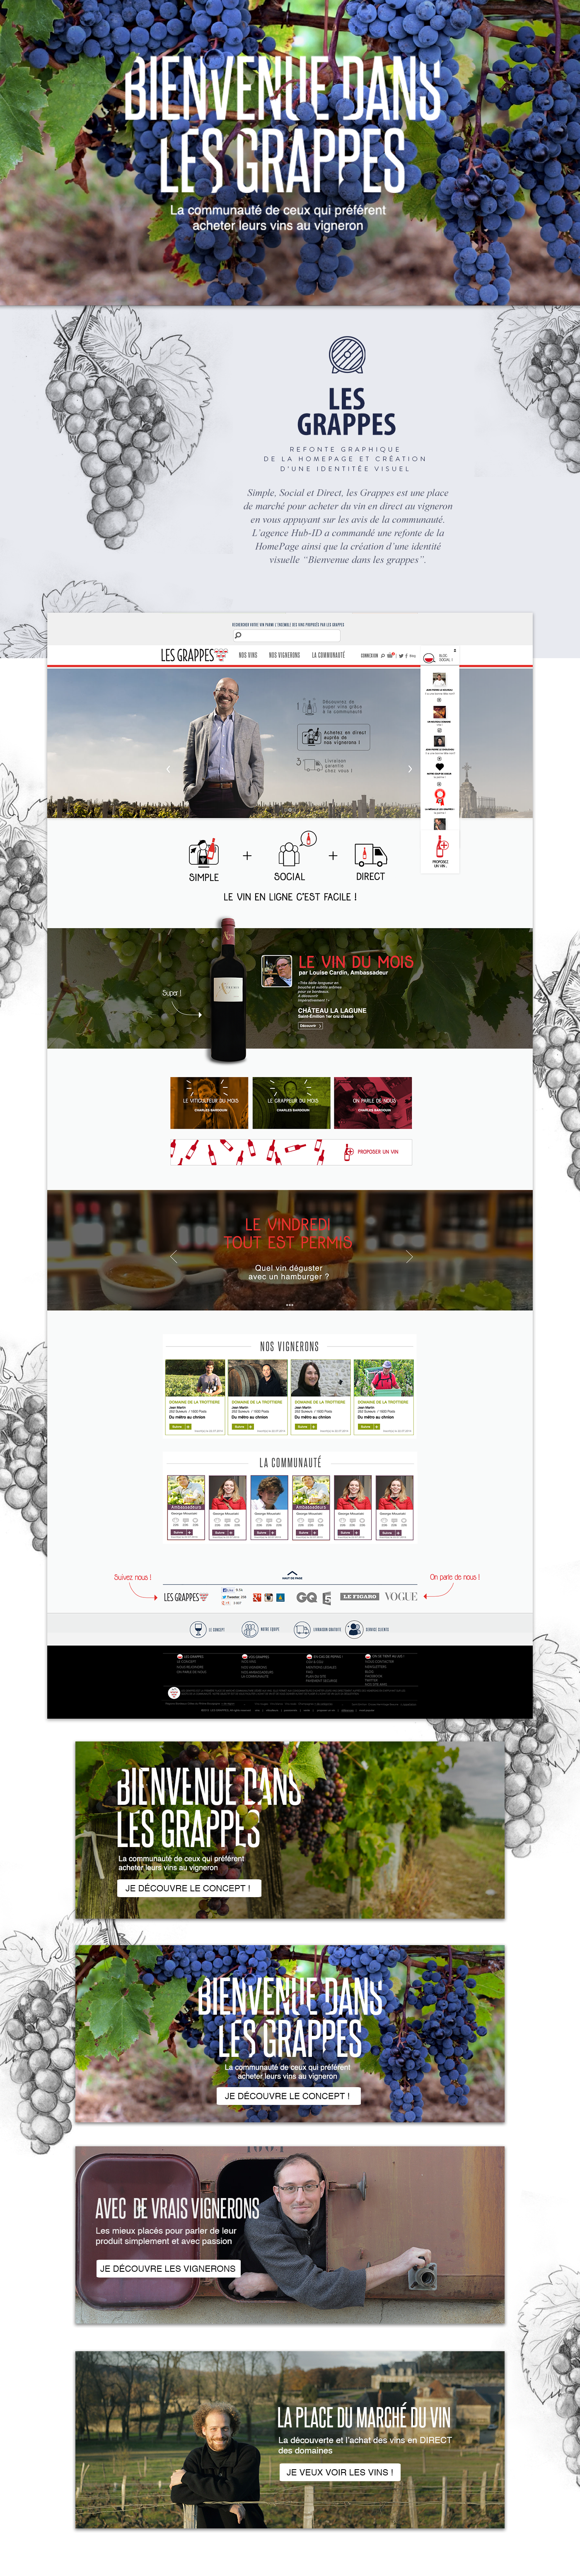 grappes wine Webdesign social network homepage vigneron